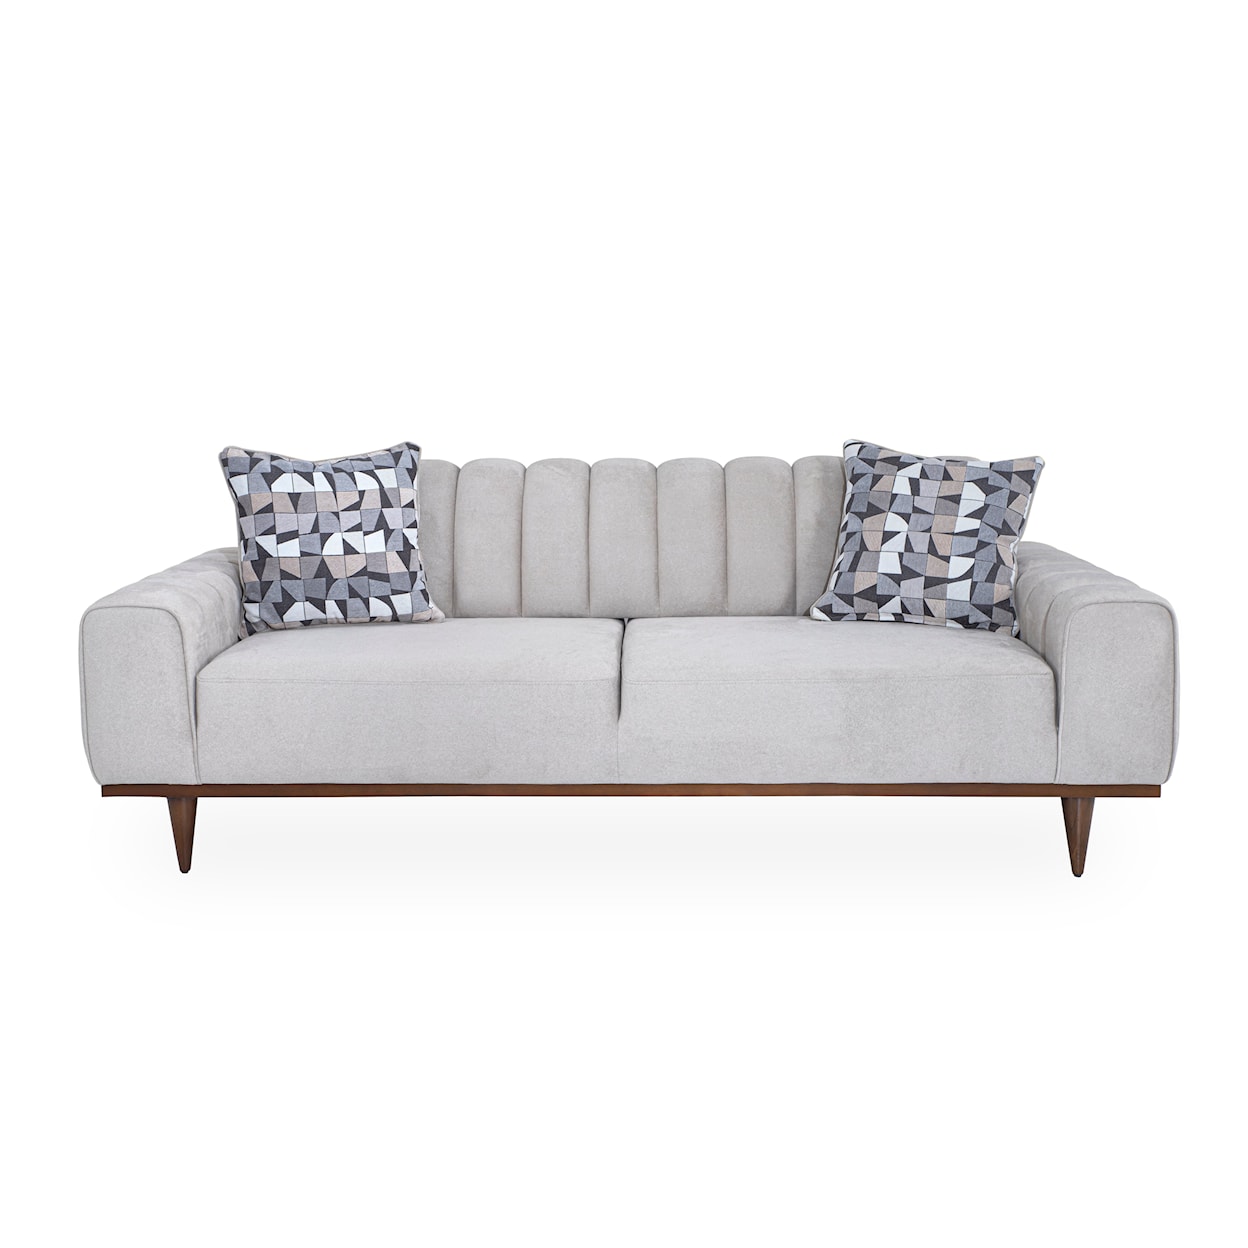 Michael Amini Balboa Upholstered Sofa